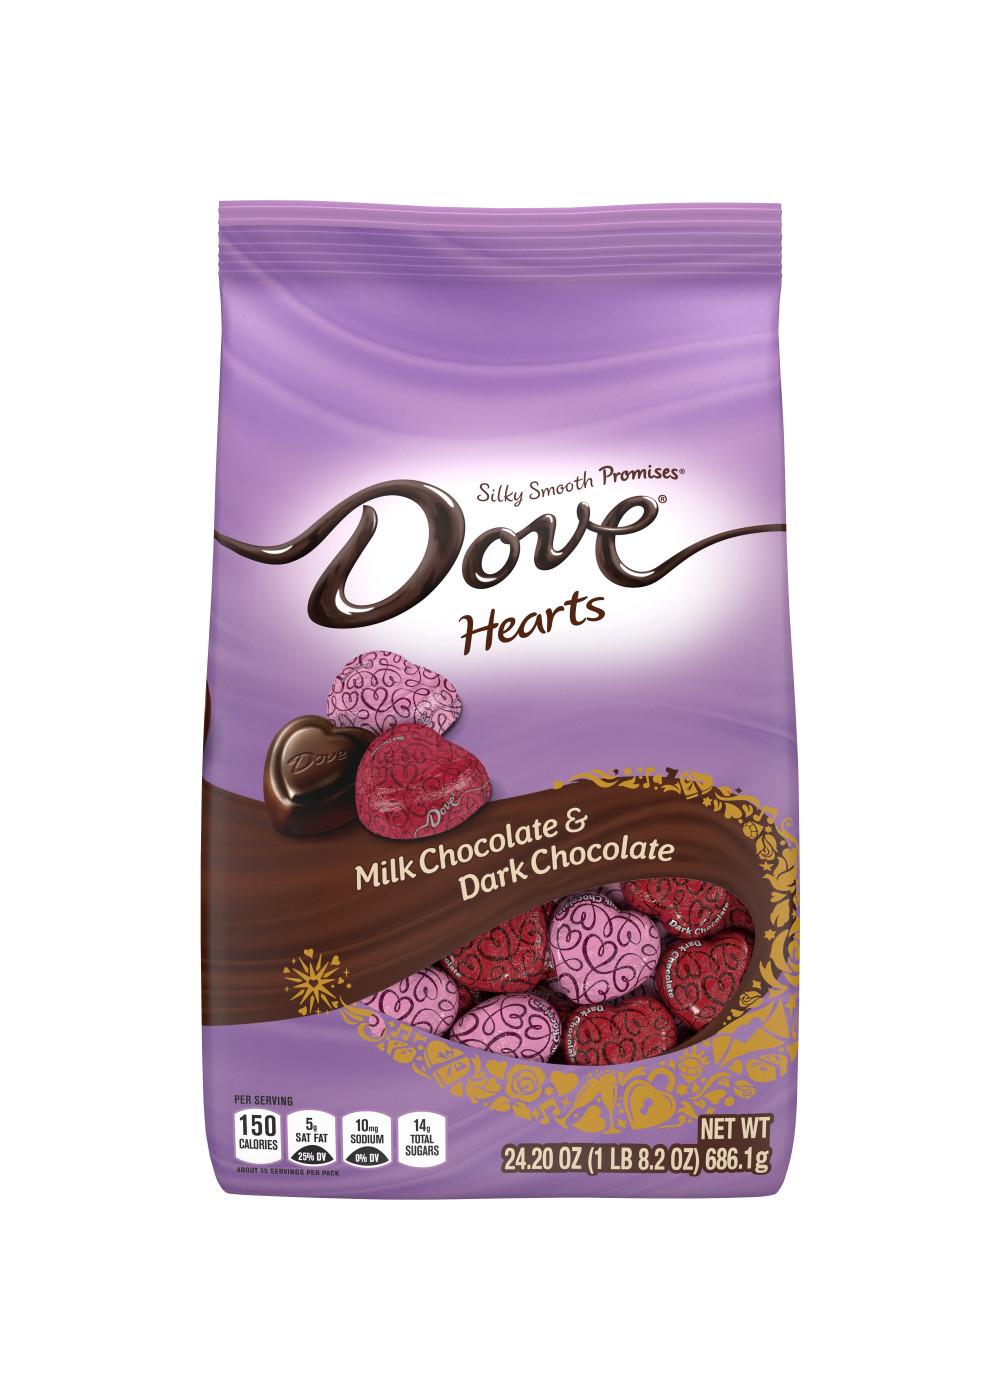 Dove Promises Hearts Milk & Dark Chocolate Valentine's Candy; image 1 of 7